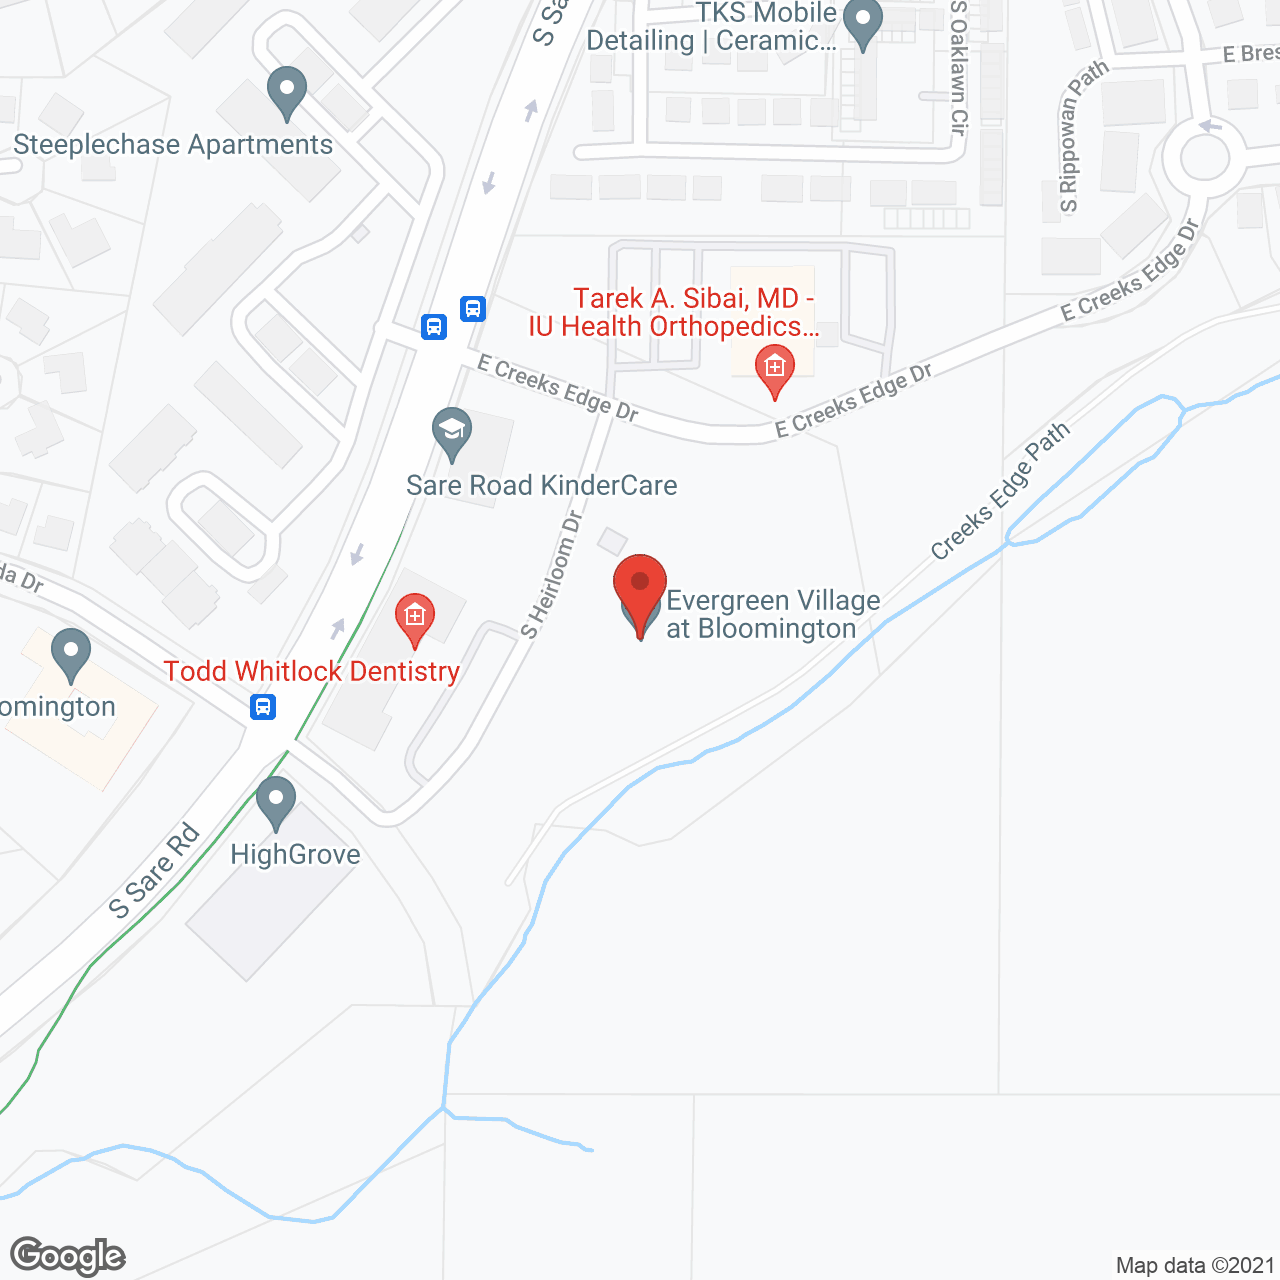 Evergreen Village of Bloomington in google map